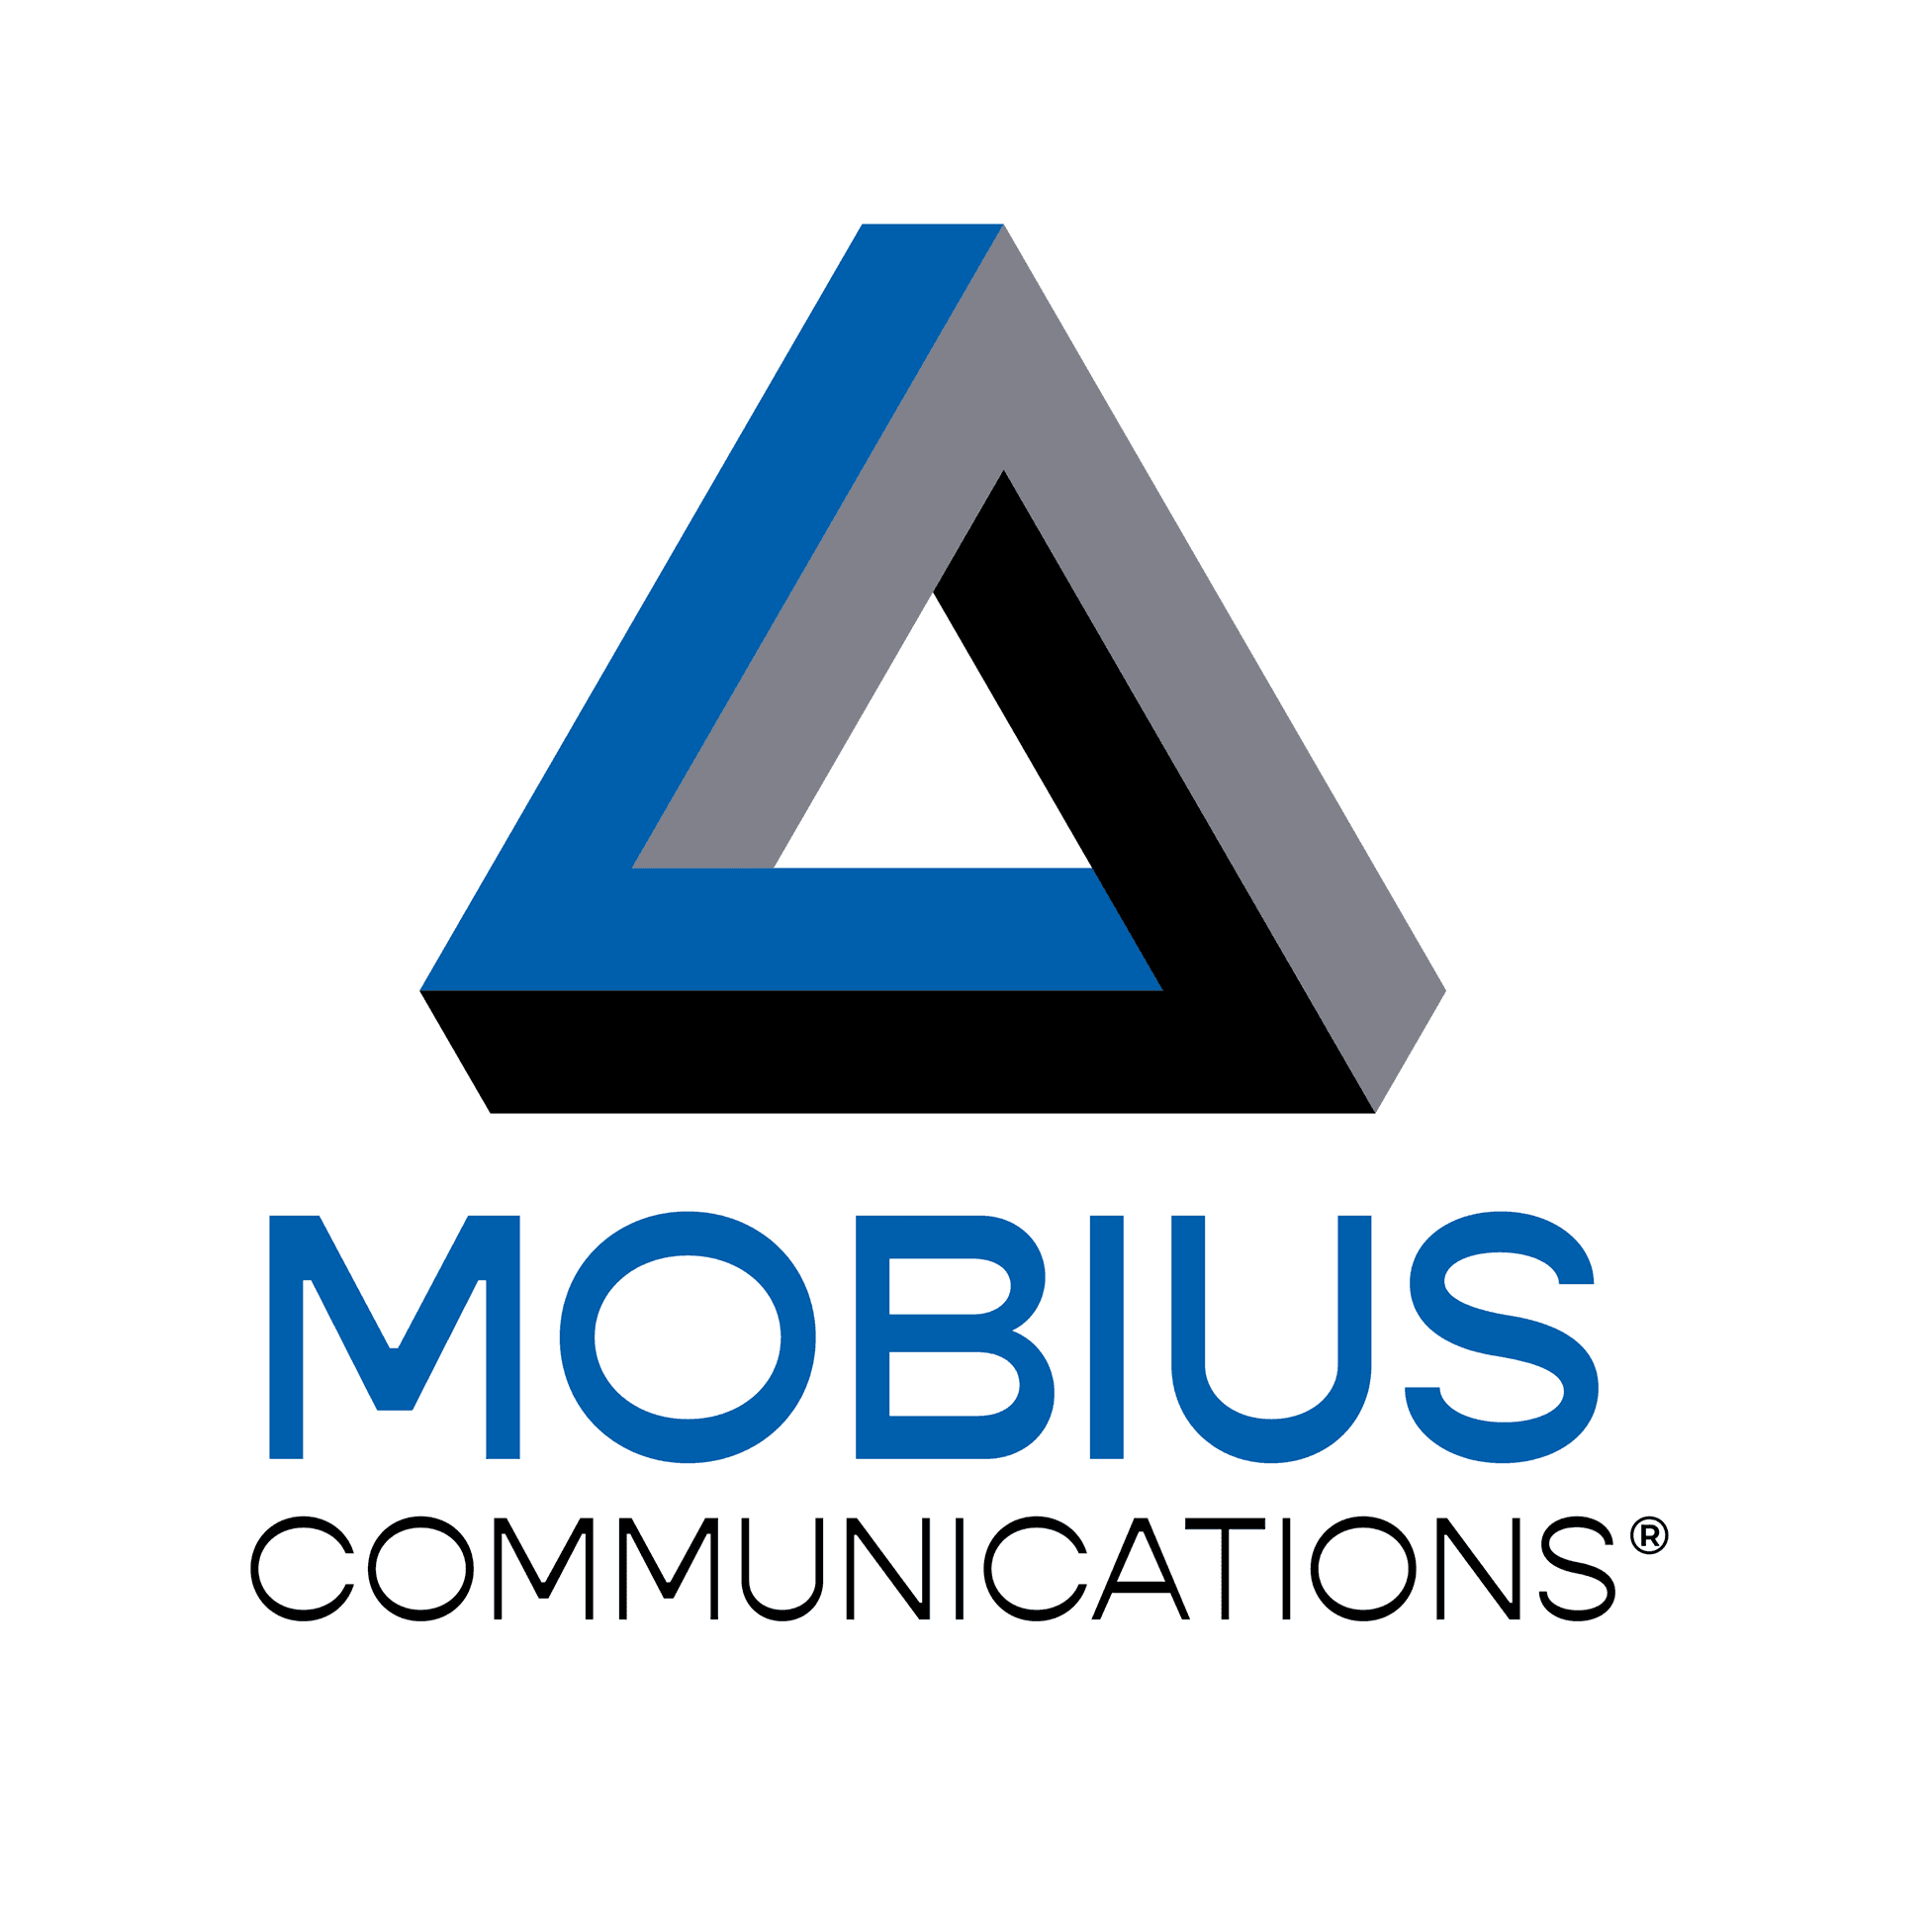 Mobius Communications